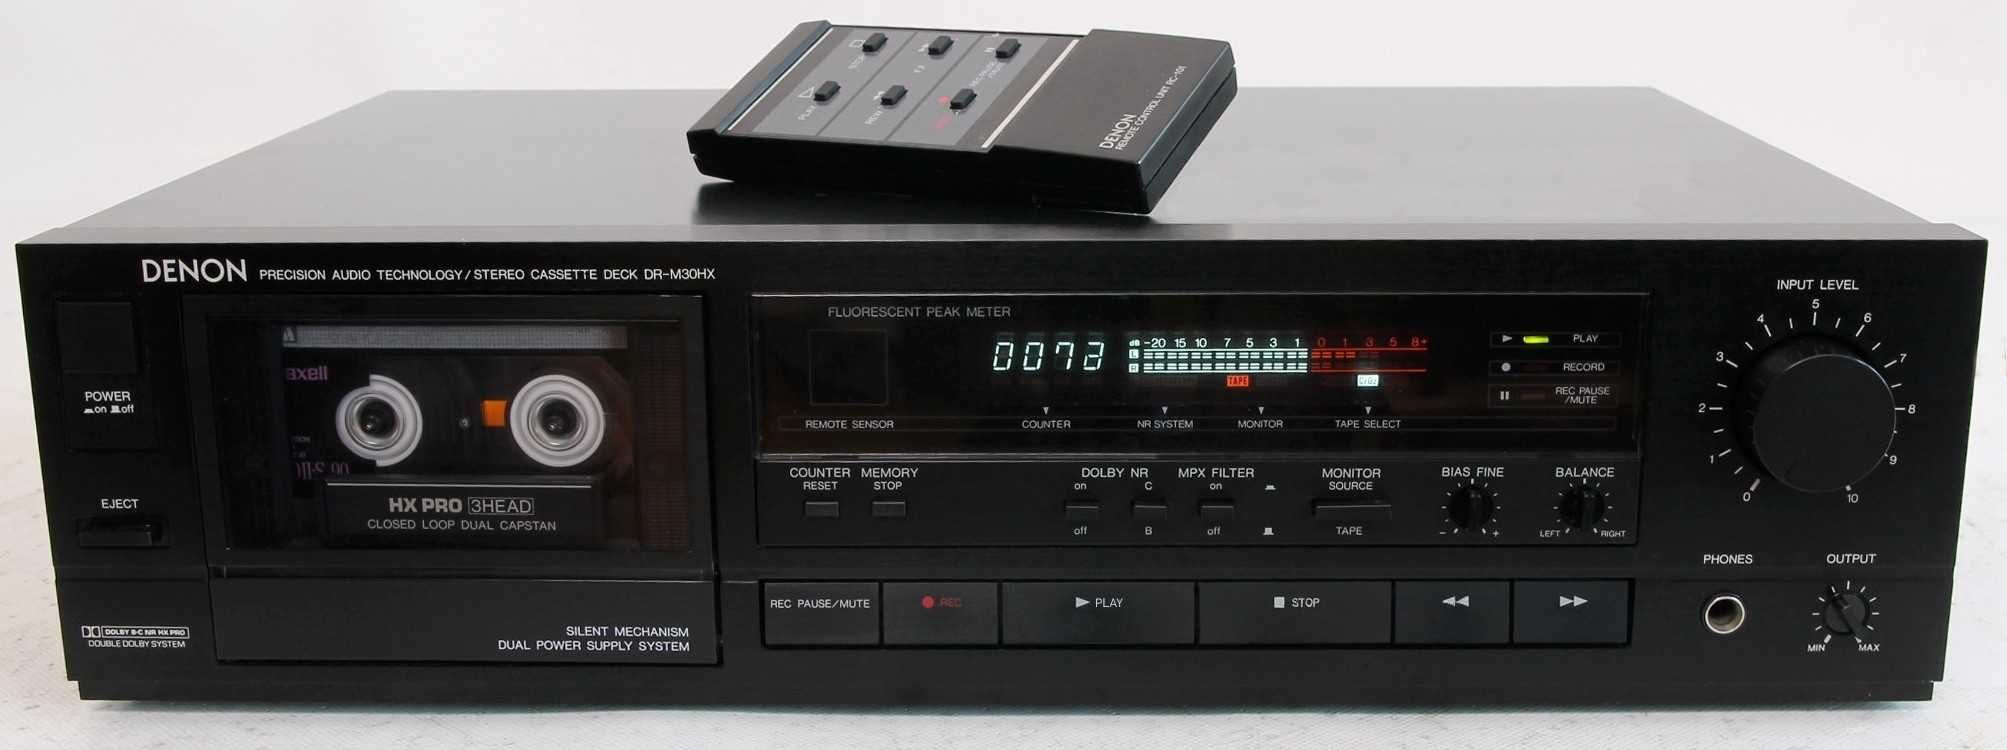 Denon DR-M30HX - кассетная дека, пульт ДУ, 3 Heads, 220V